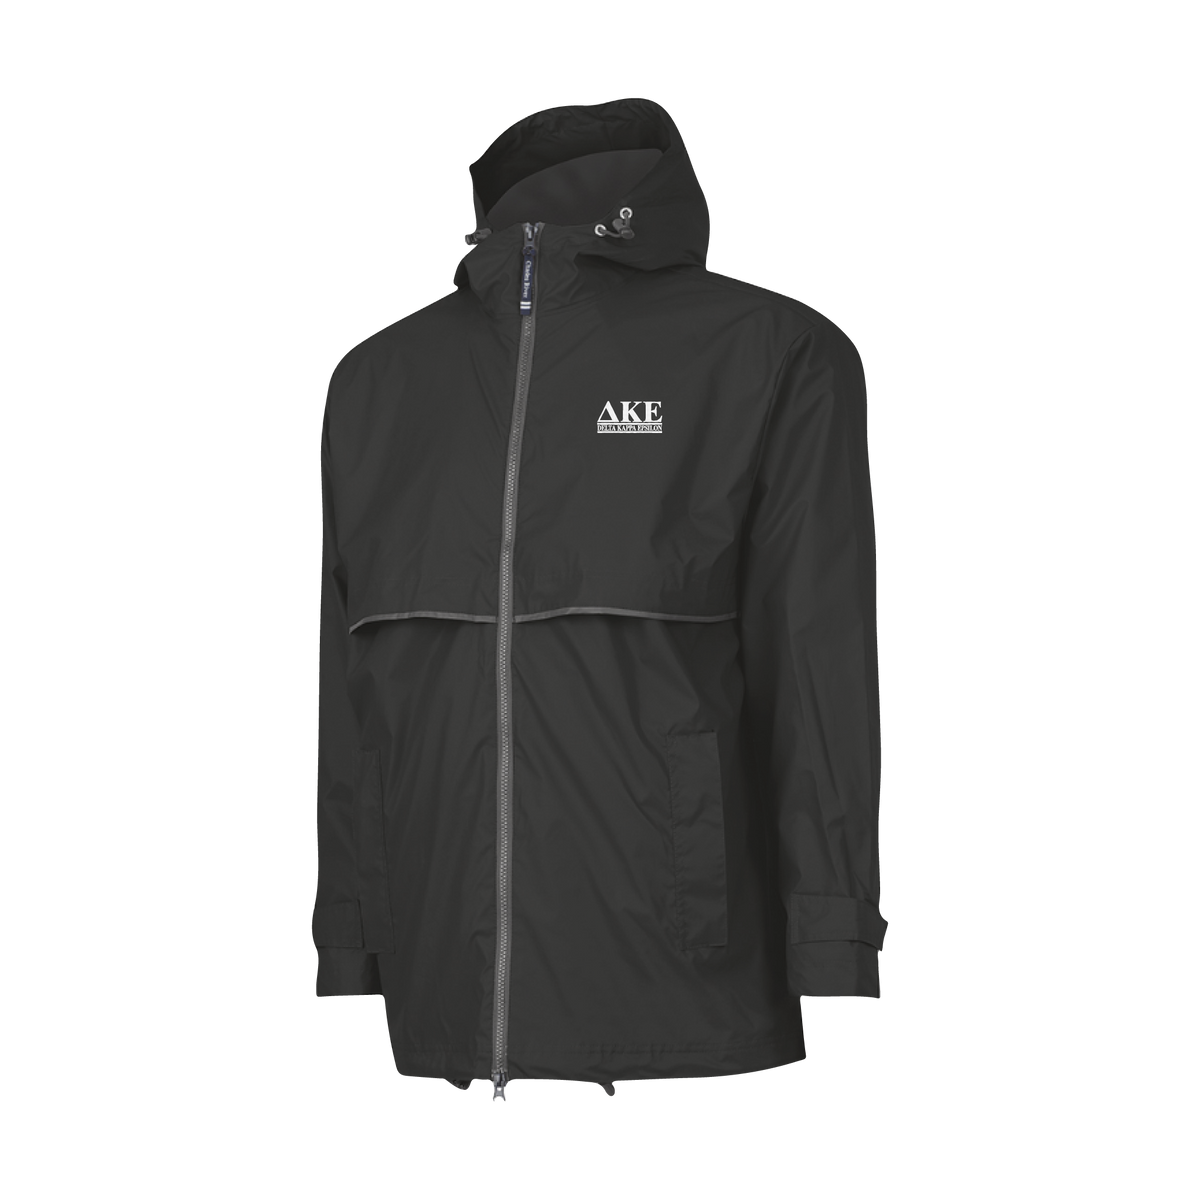 B-Unlimited Greek - Rain Jacket (DKE) - Charles River - 9199 - New Englander Rain Jacket - Black